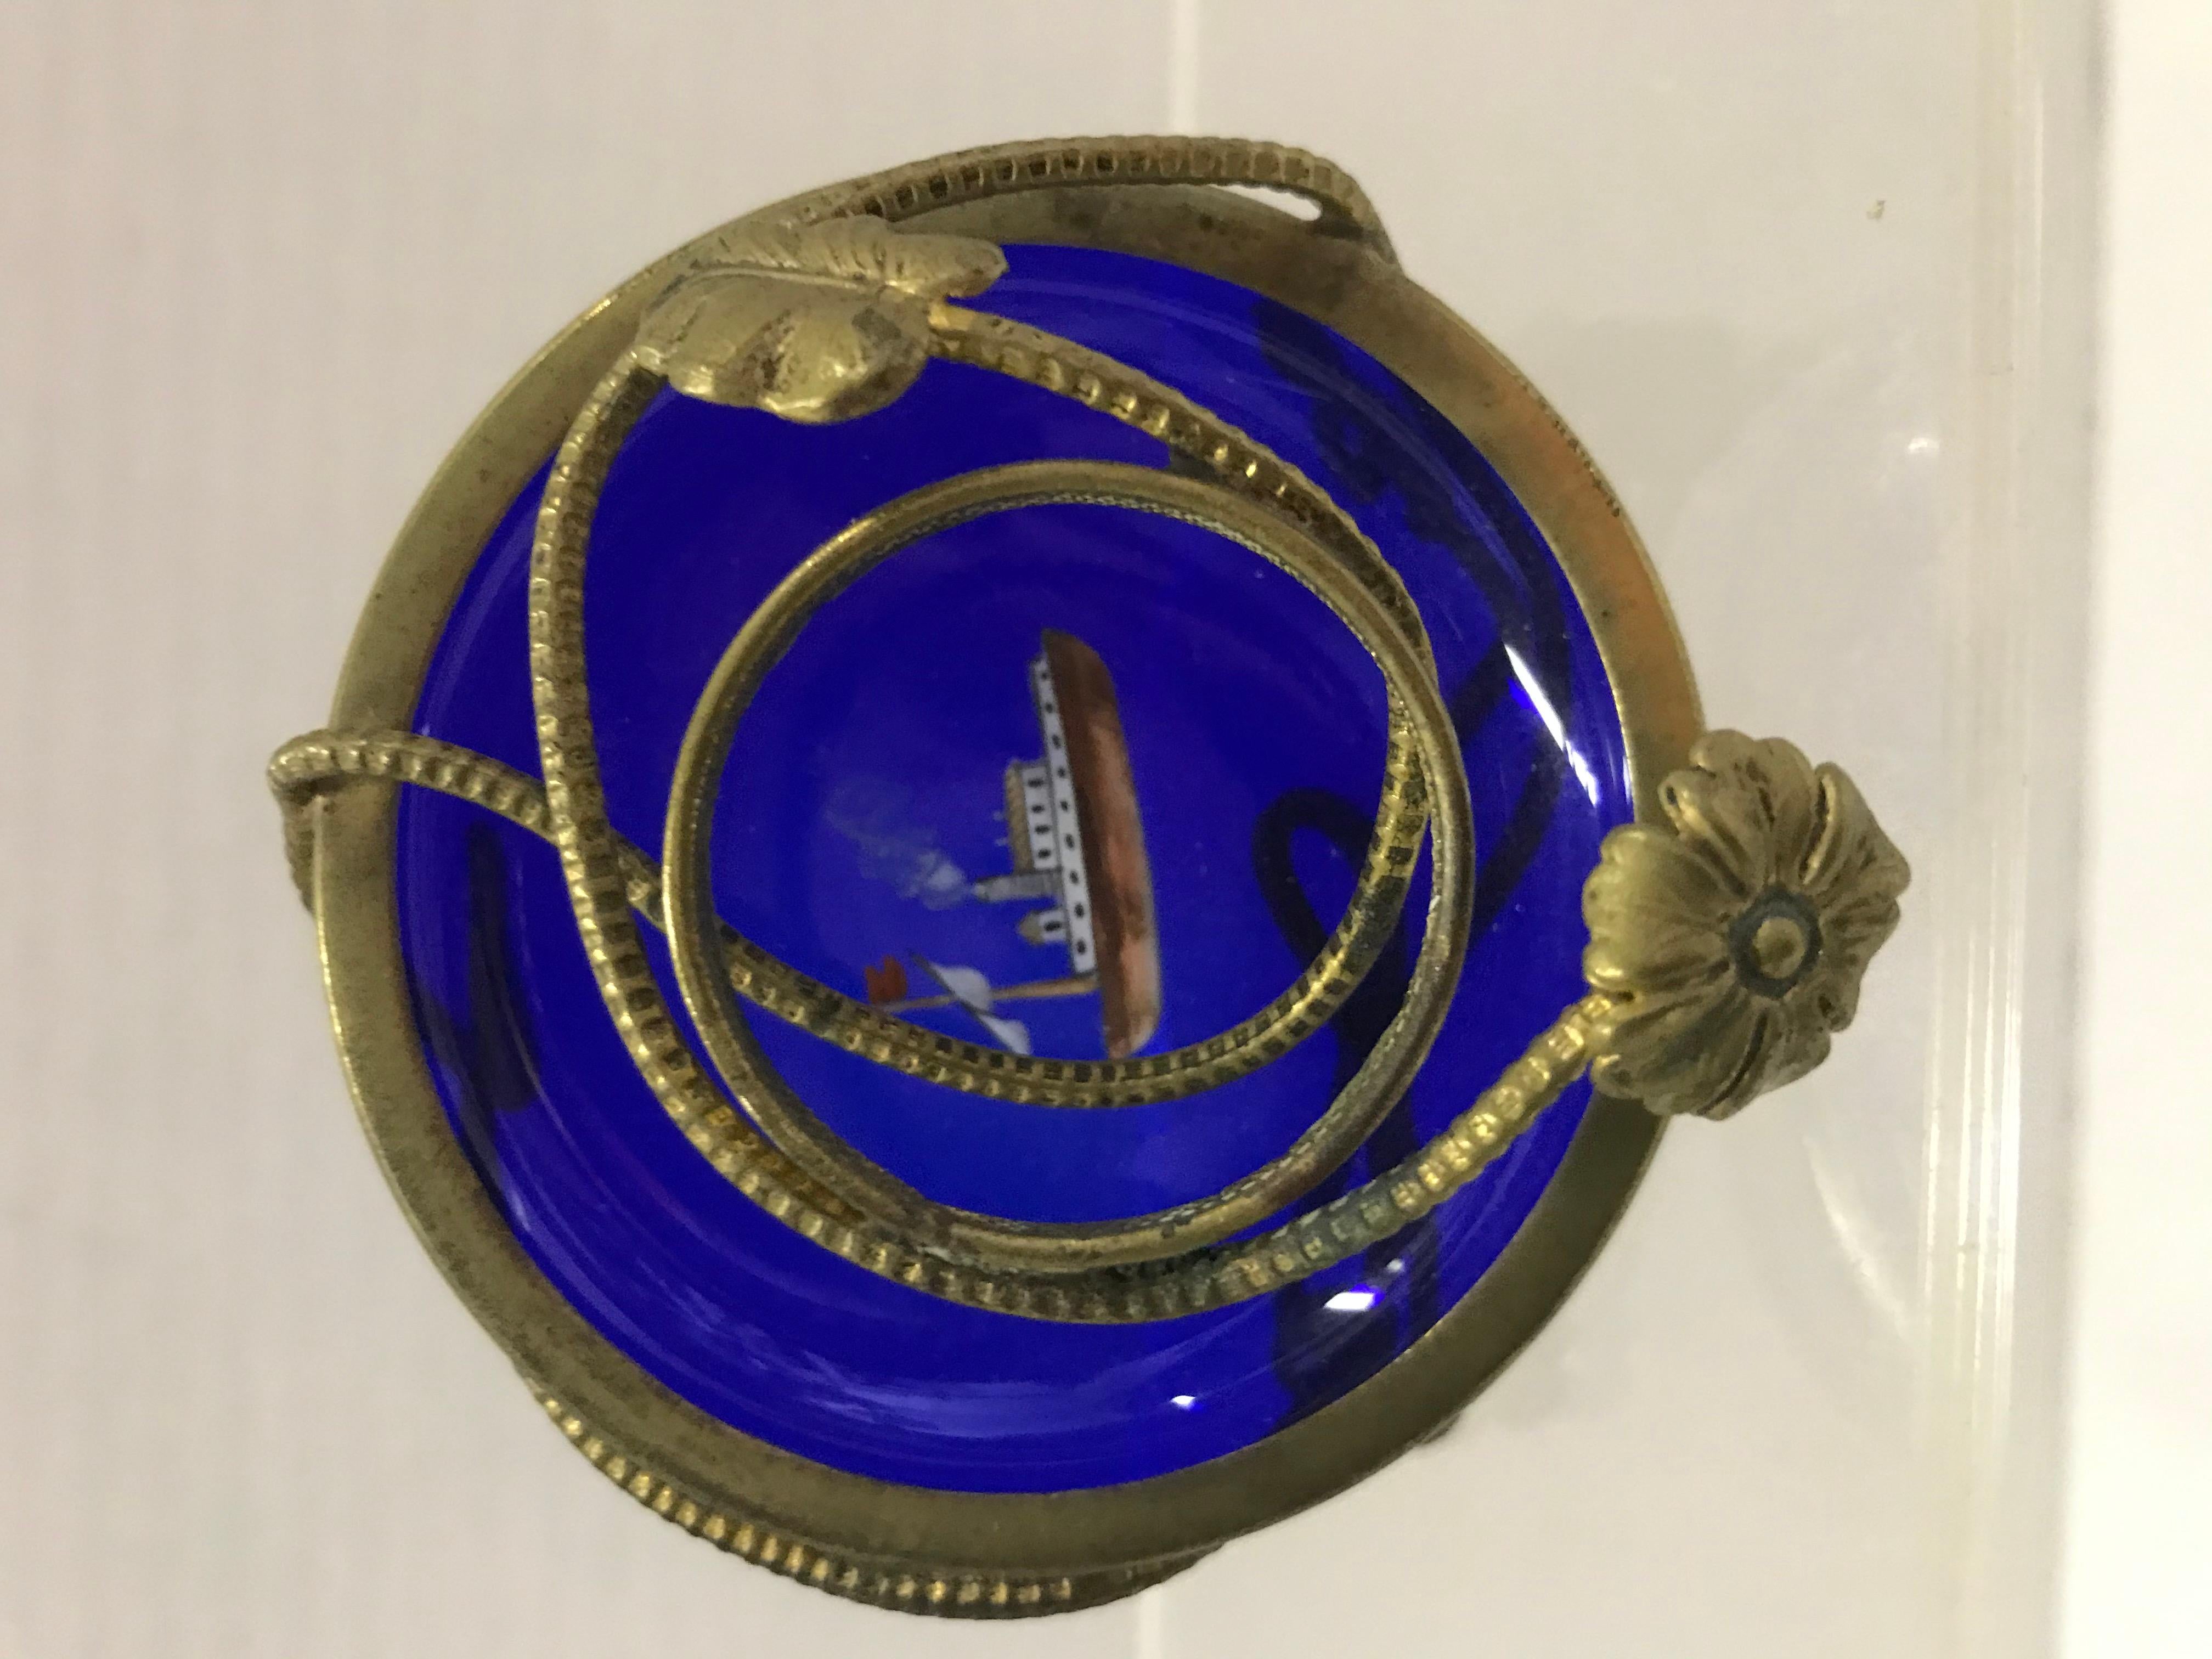 Gilt Imperial Glasswork of St. Petersburg 1900s Cobalt Blue Glass Egg on Stand